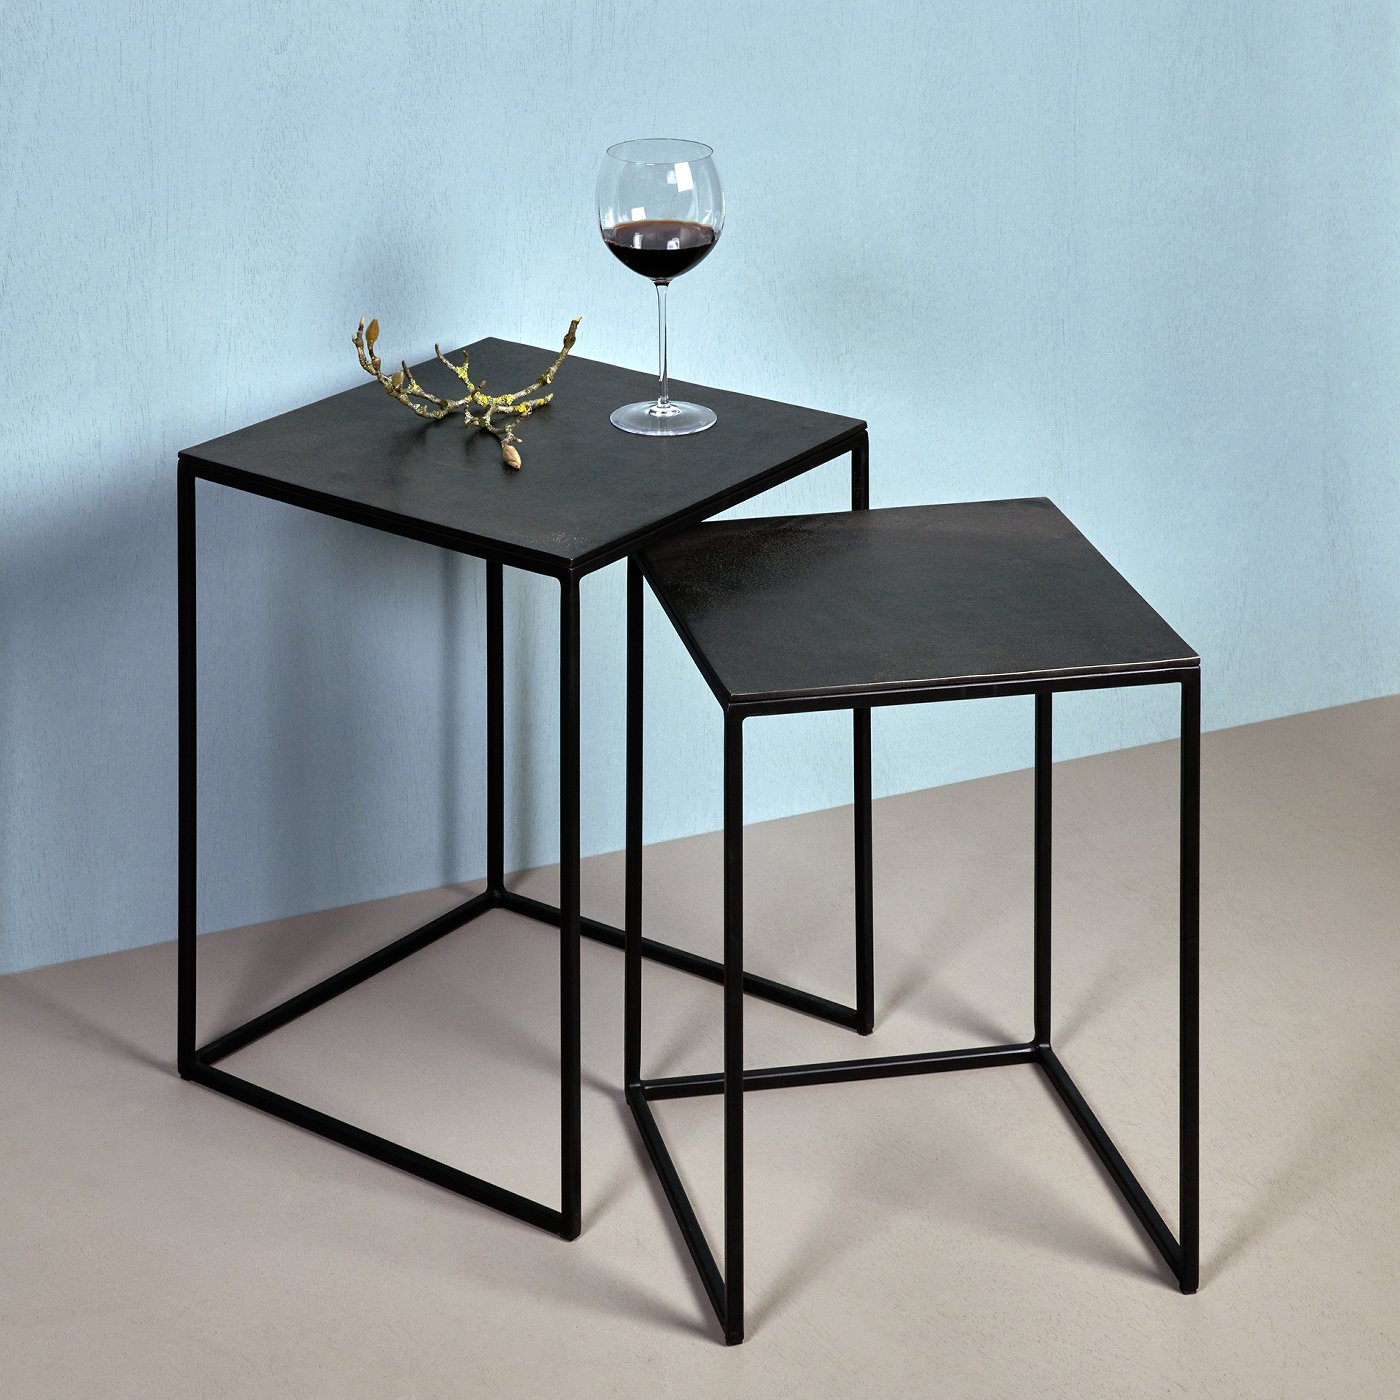 Dado side table set metal stand aluminium